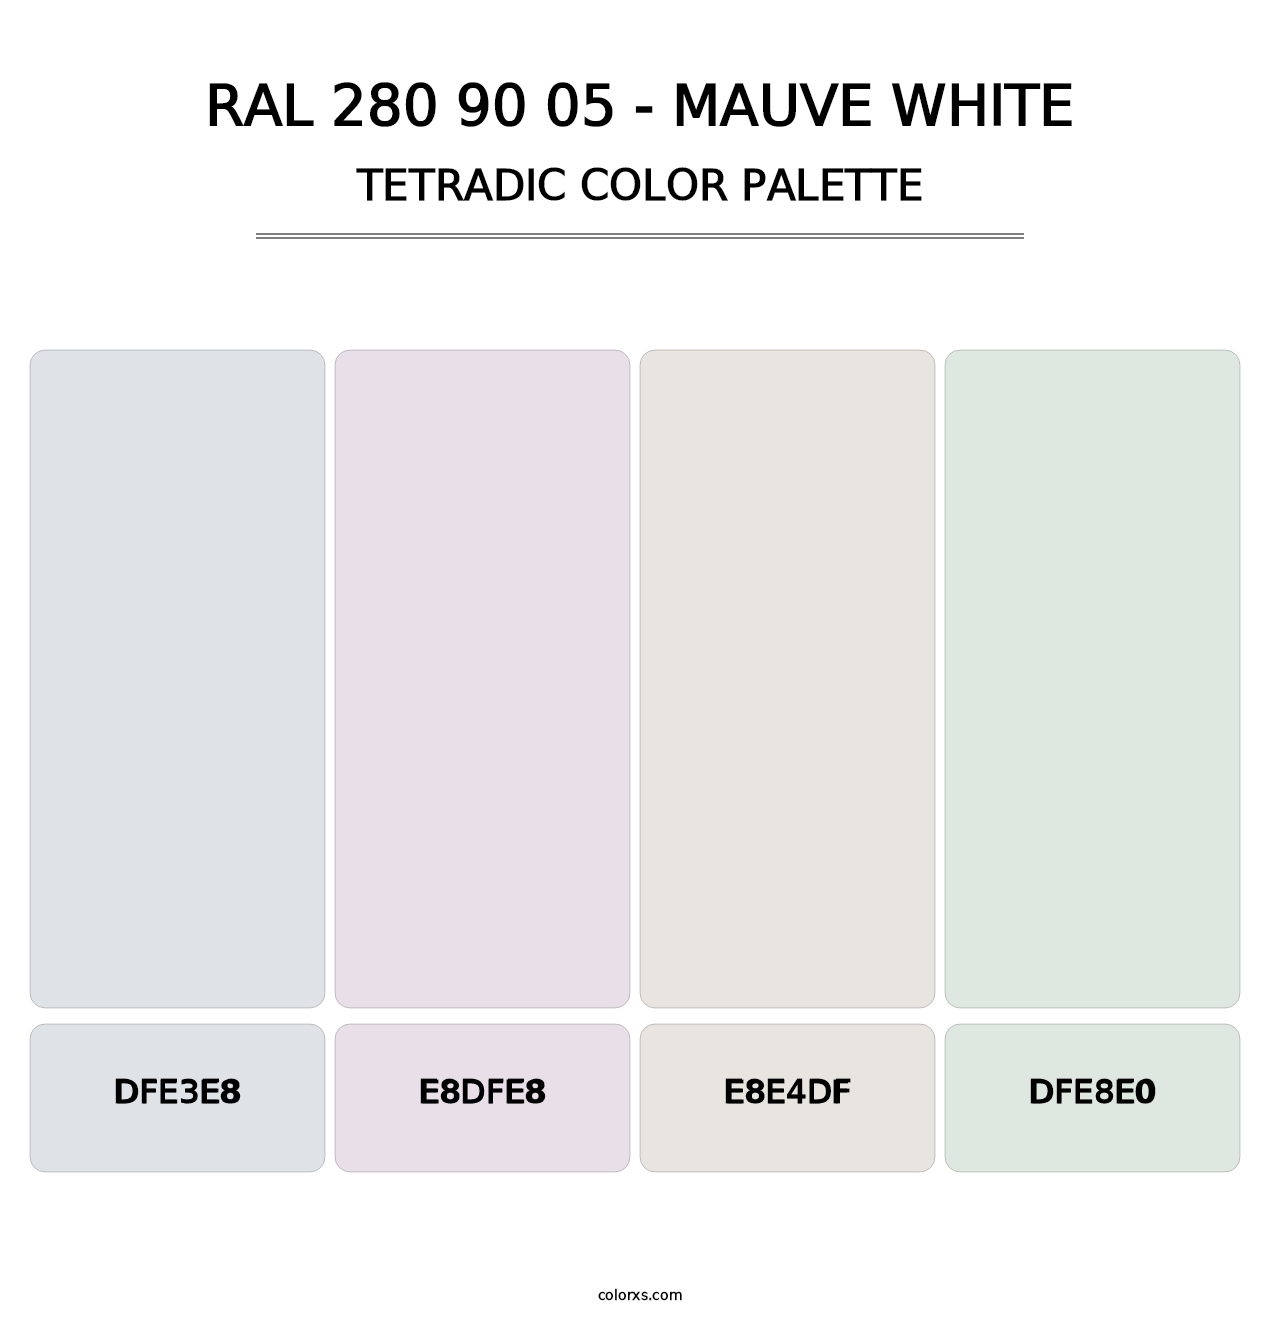 RAL 280 90 05 - Mauve White - Tetradic Color Palette